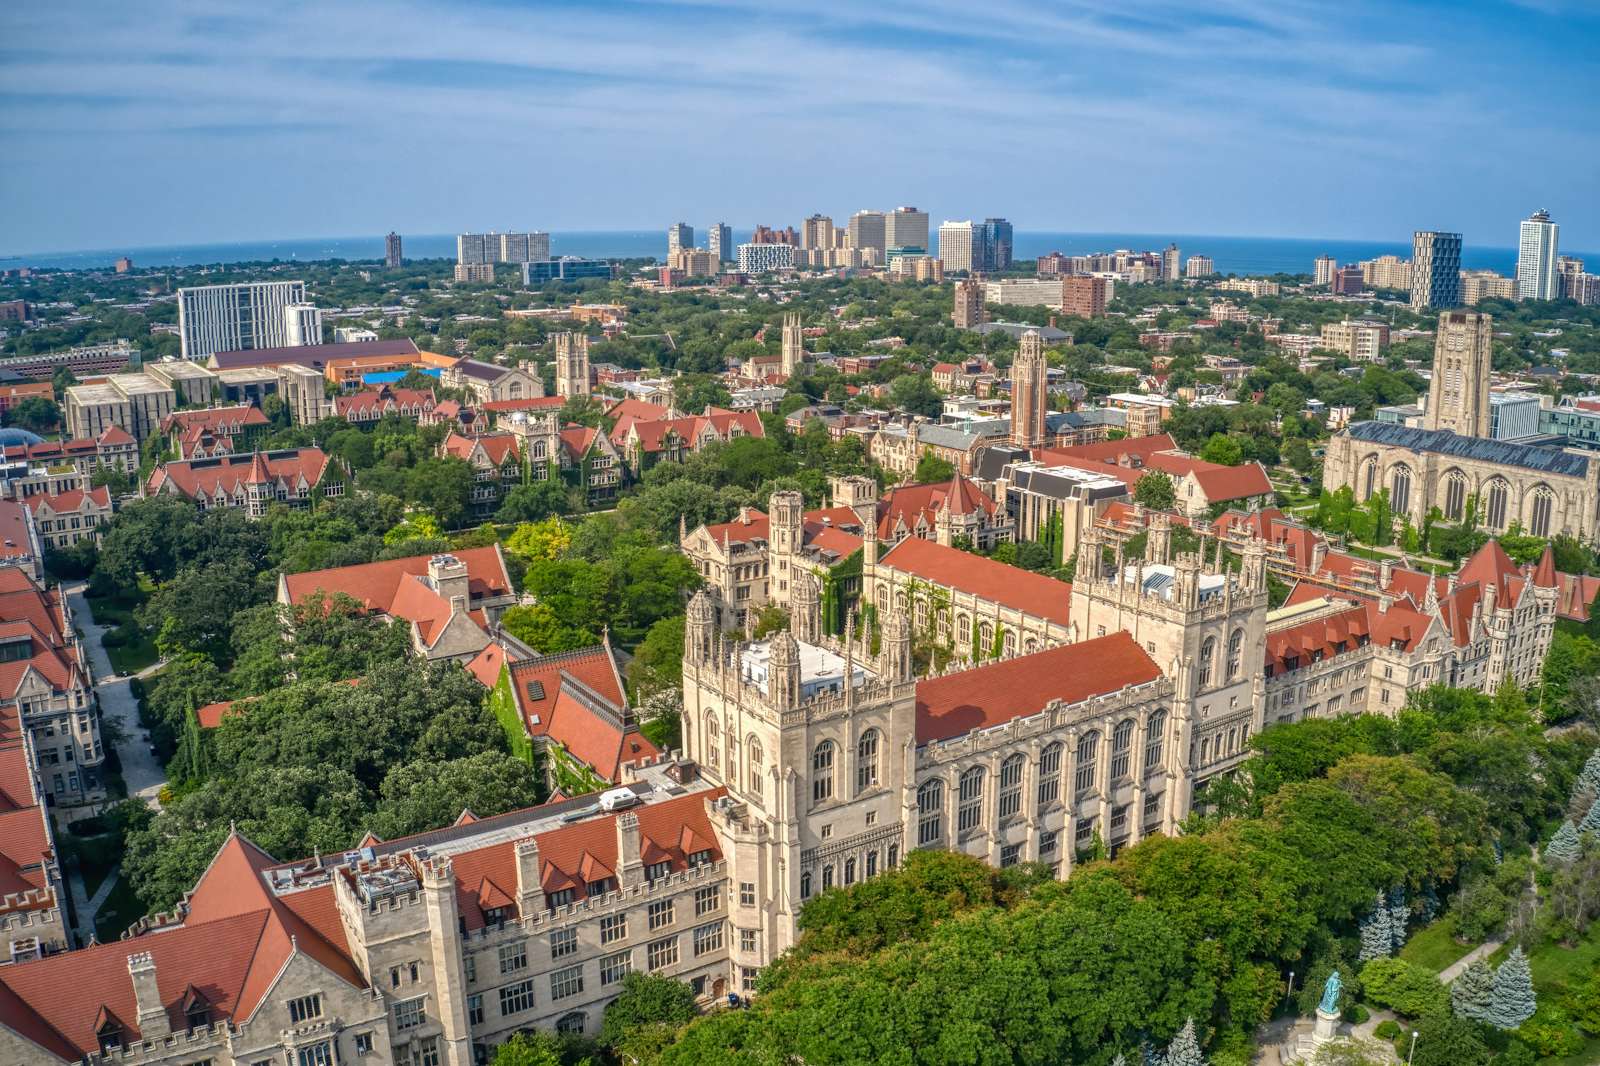  University of Chicago, Illinois